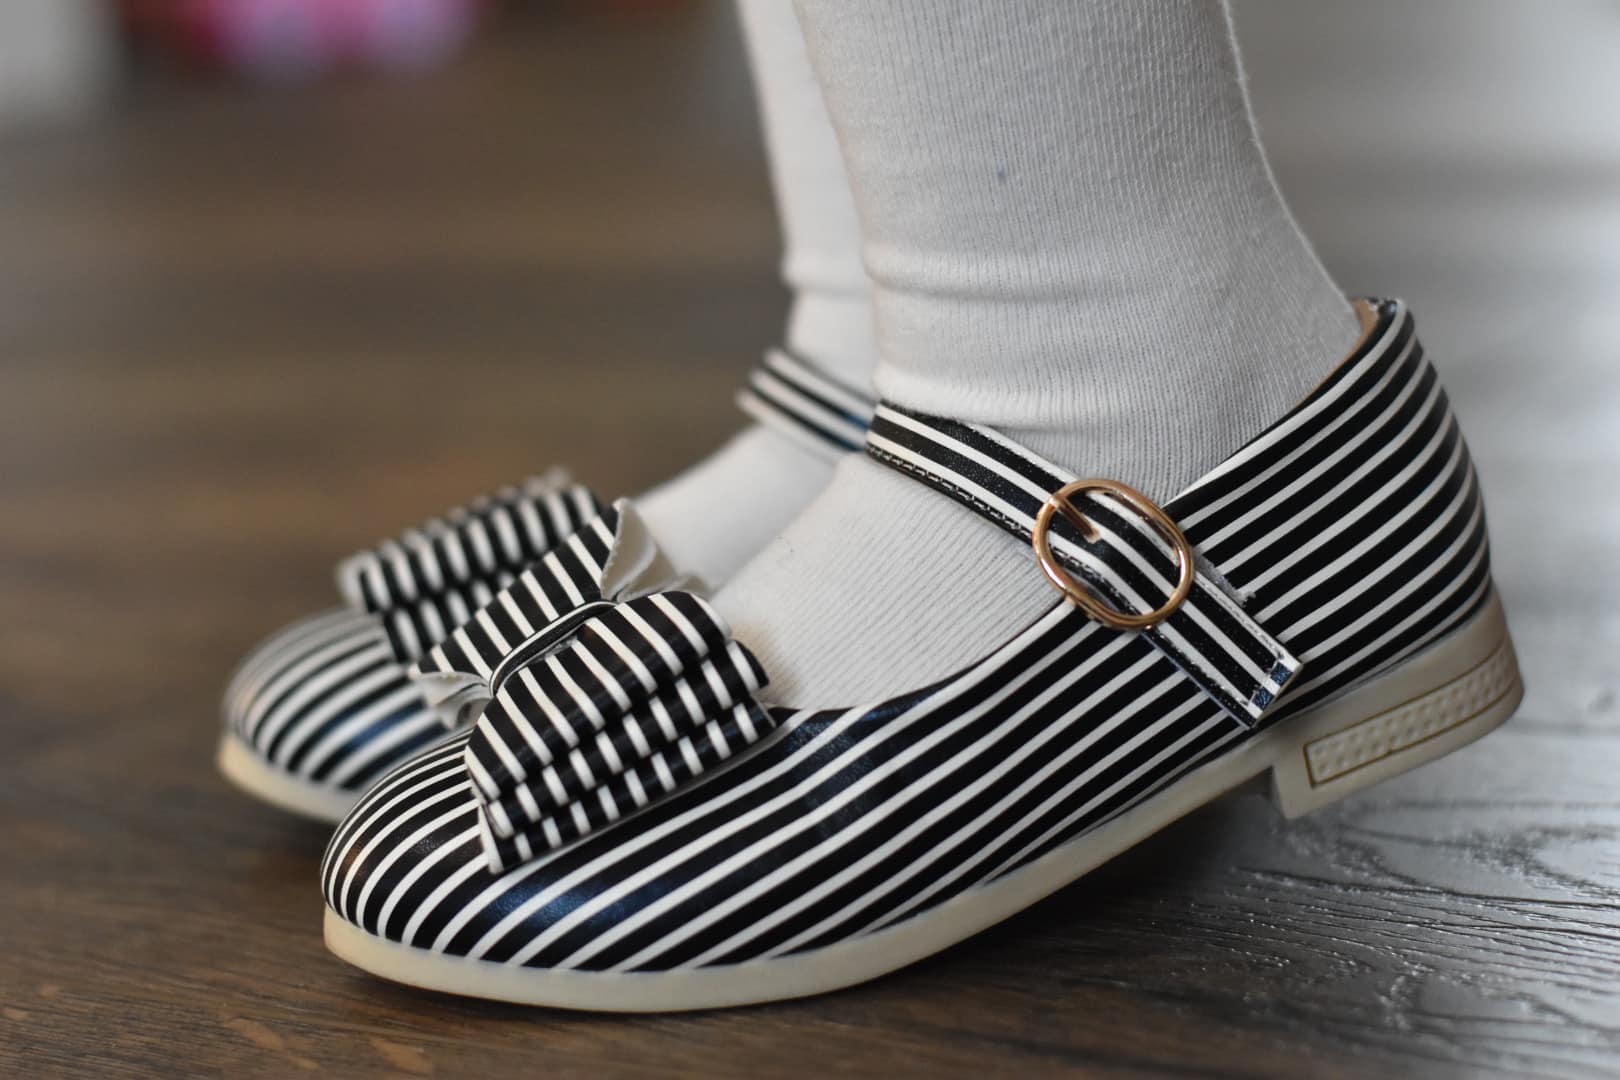 [Black + White Striped] Bow Shoes